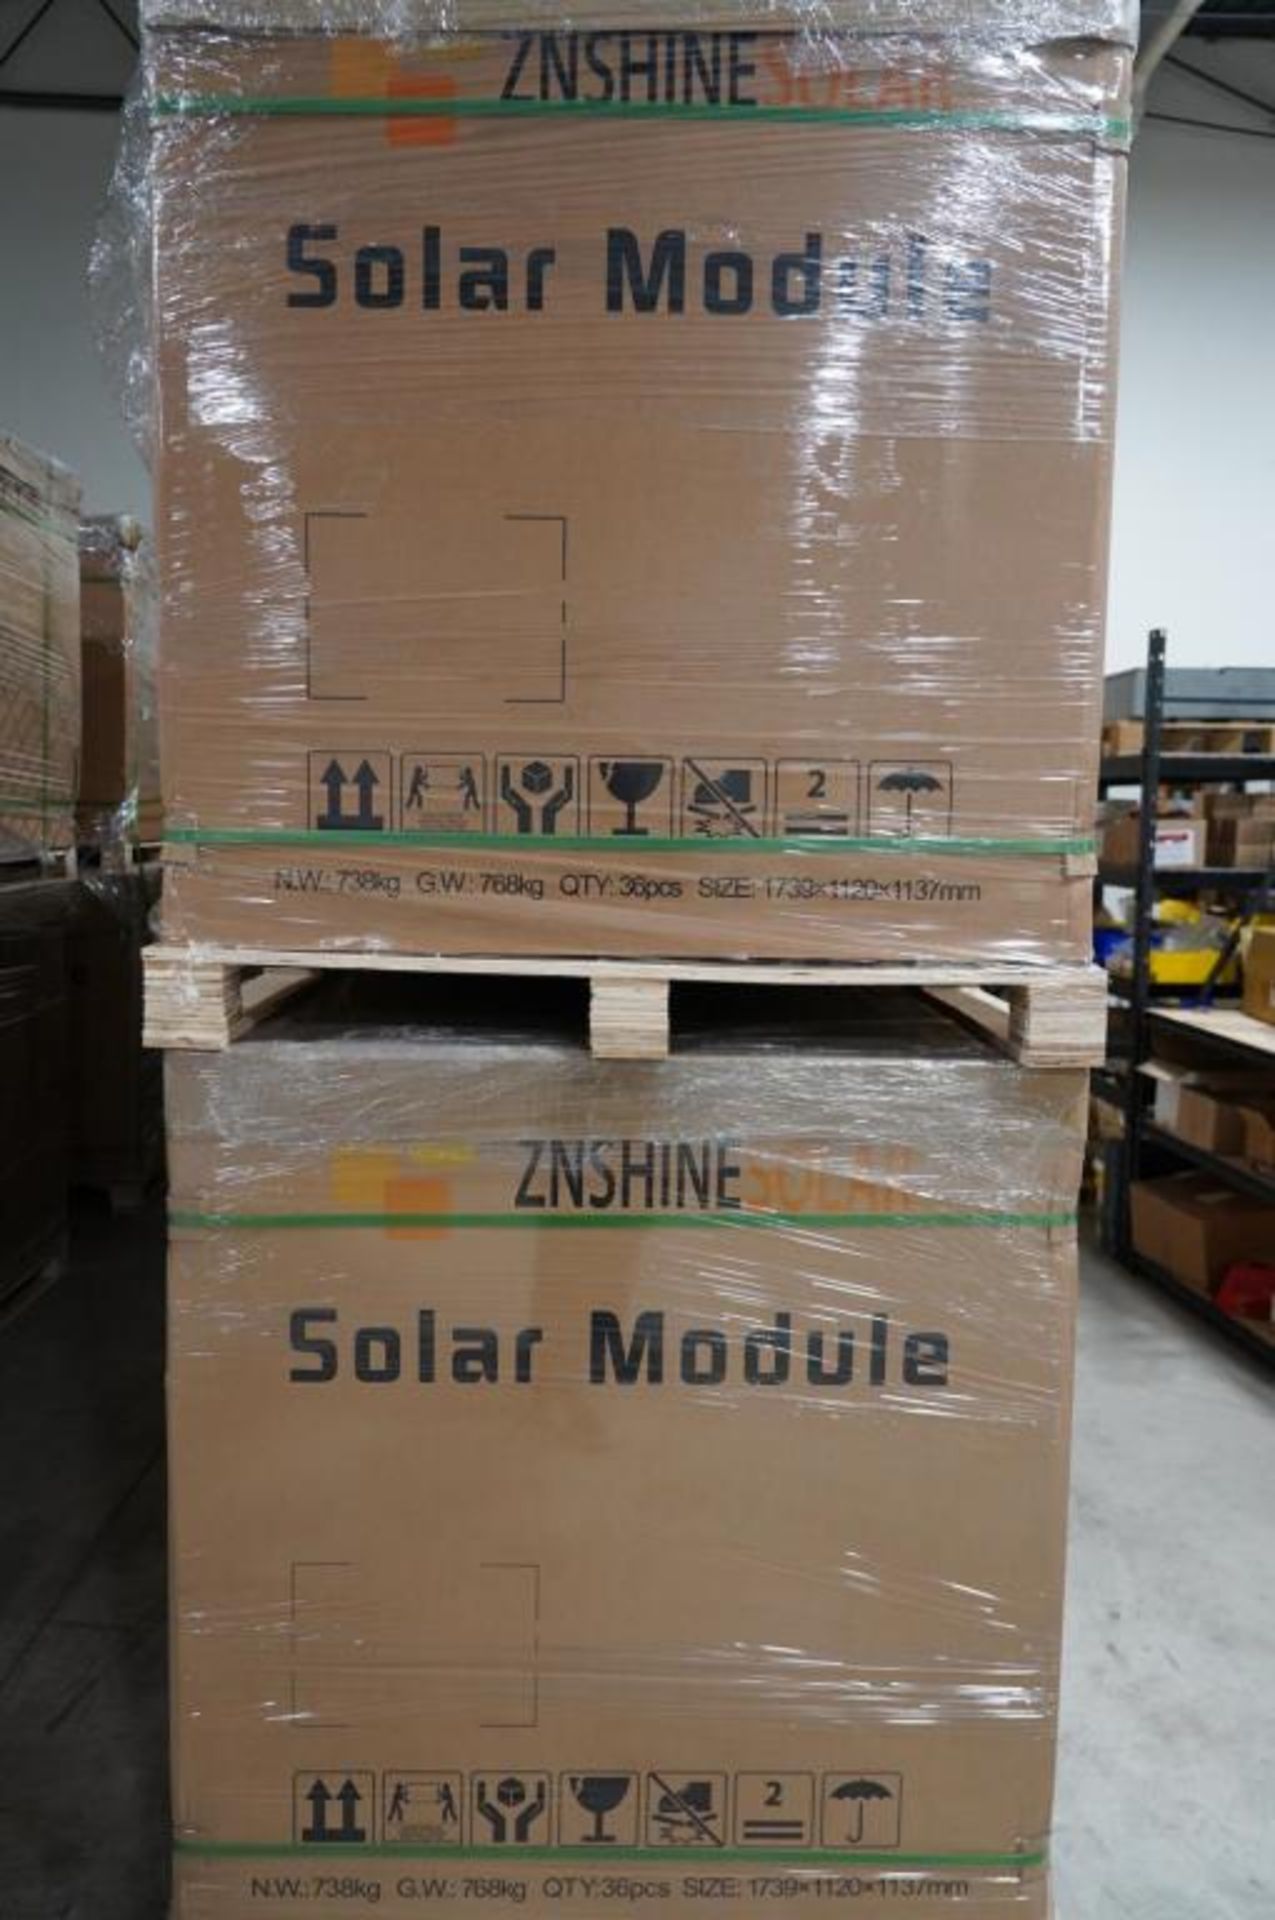 ZNShine 370 Watt Photovoltaic Solar Panels - Image 3 of 4